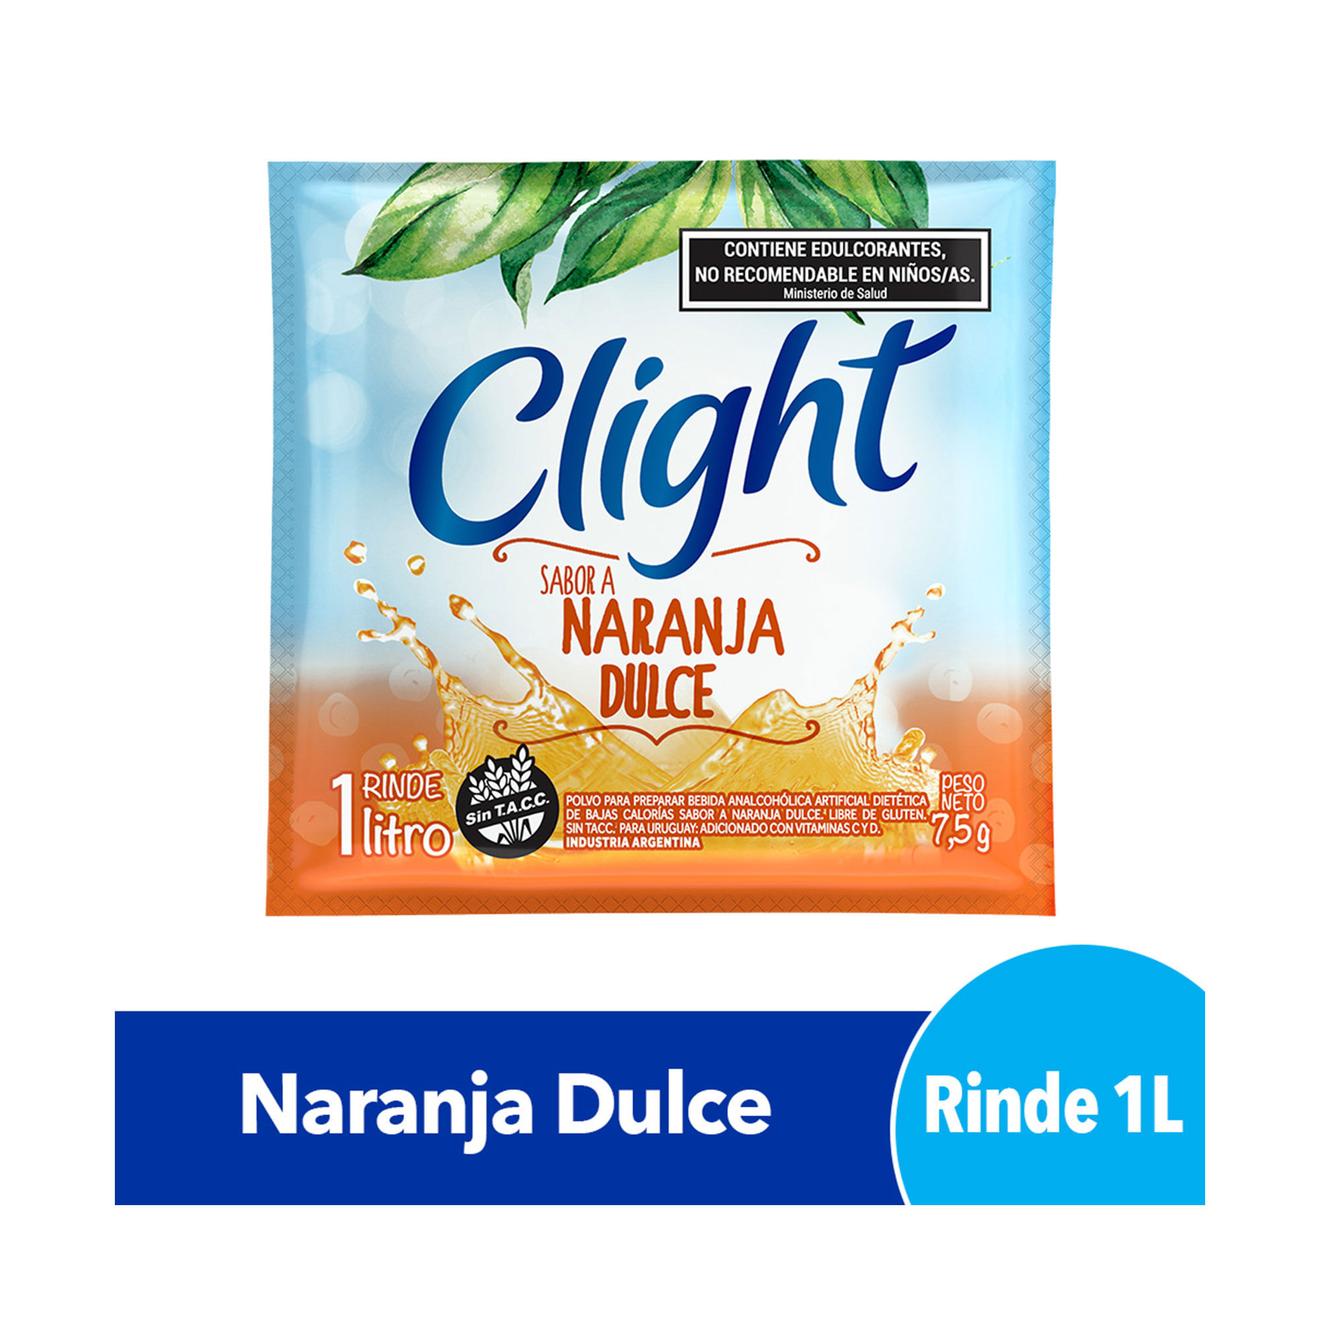 Oferta de Jugo en polvo Clight naranja dulce 7.5 g. por $270 en Carrefour